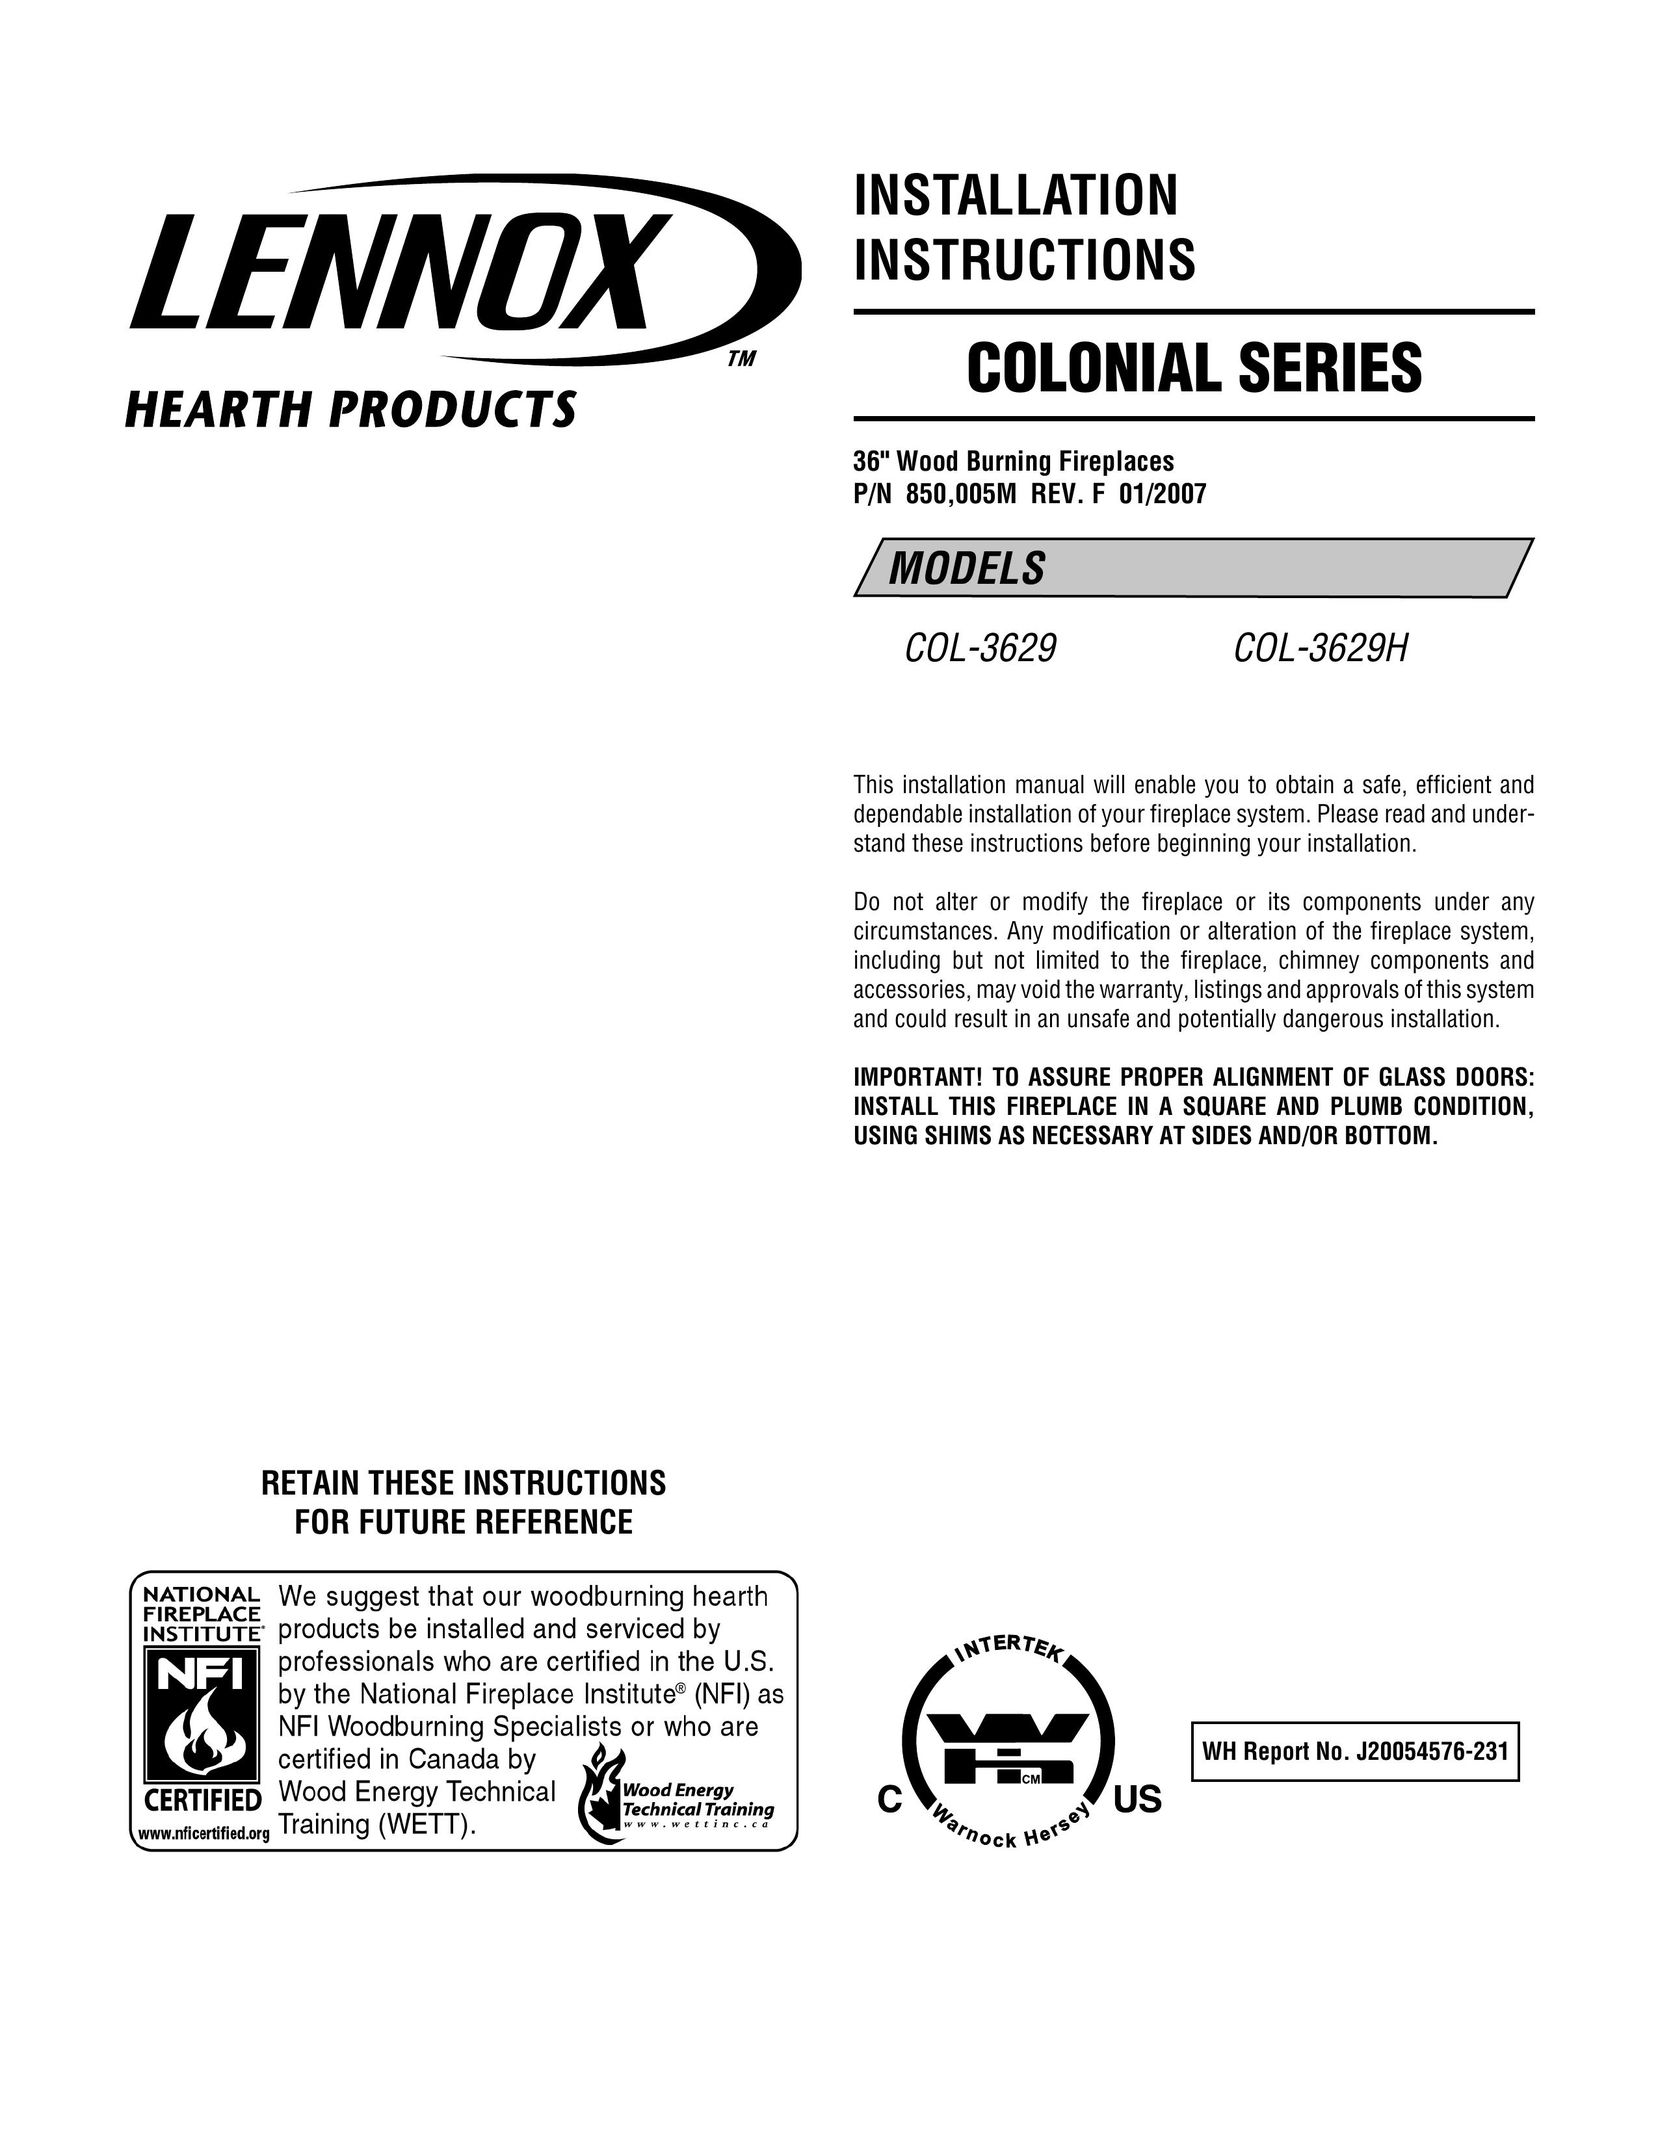 Linksys COL-3629 Indoor Fireplace User Manual